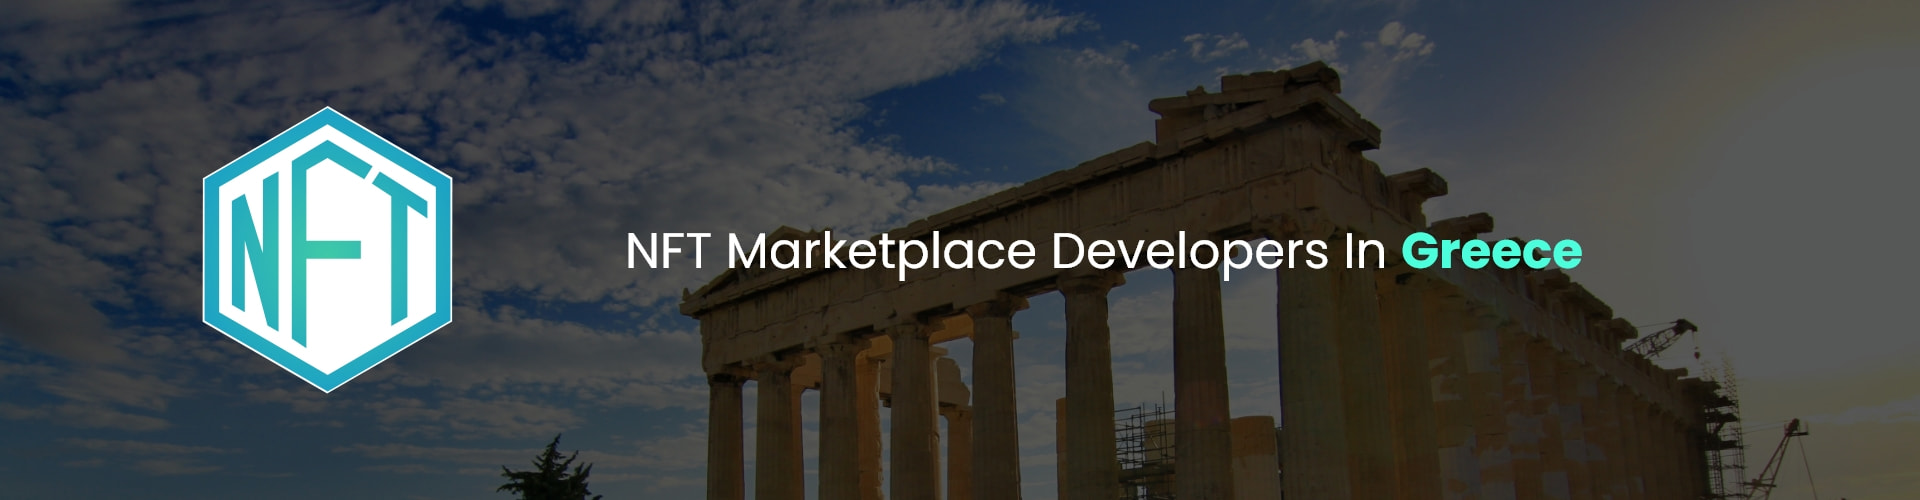 hire nft marketplace developers in Greece